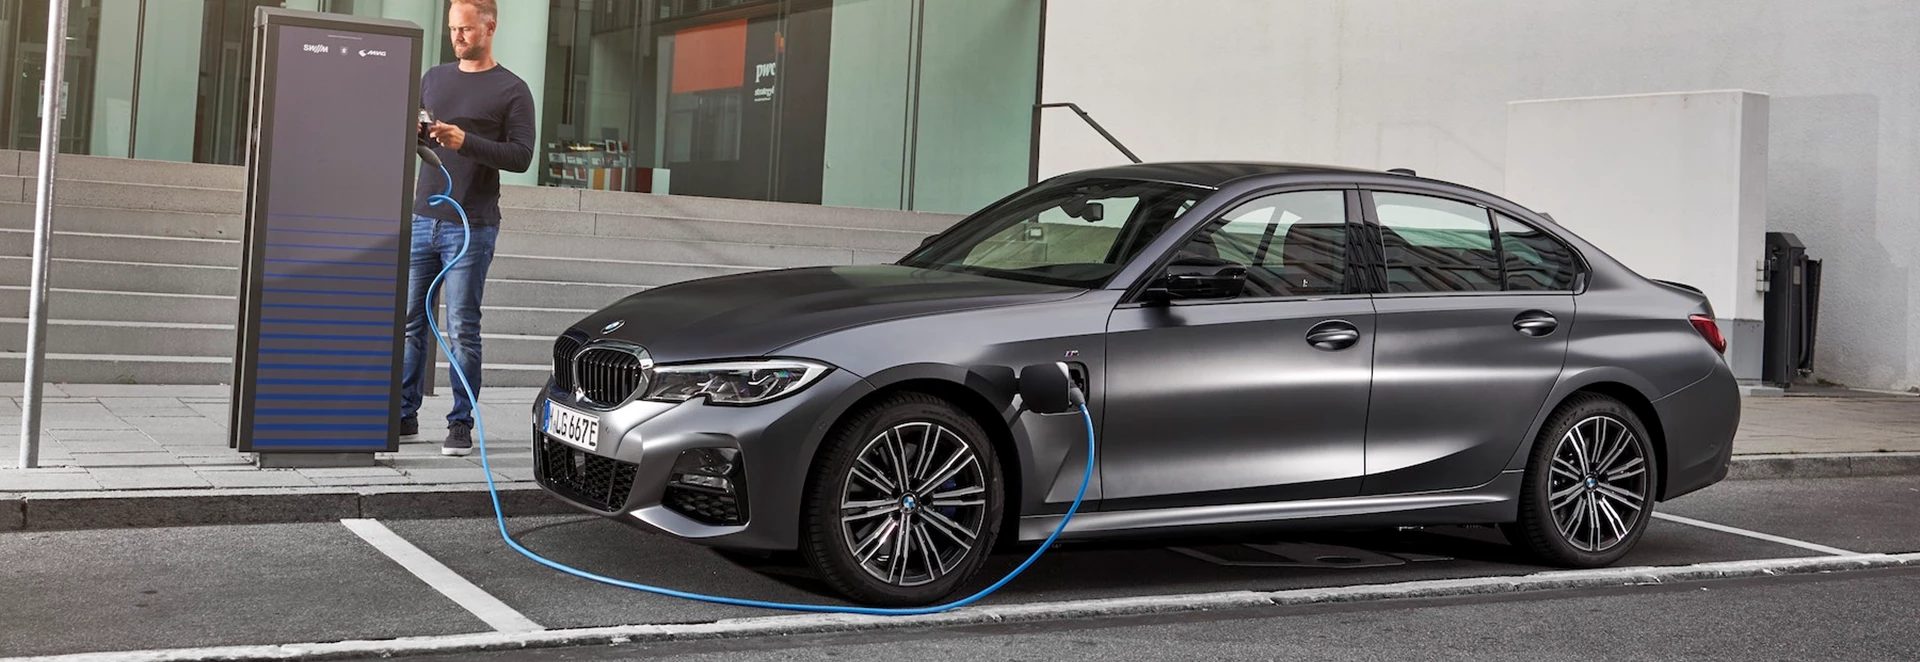 lettergreep Verplicht Informeer BMW 330e plug-in hybrid 2019 review - Car Keys